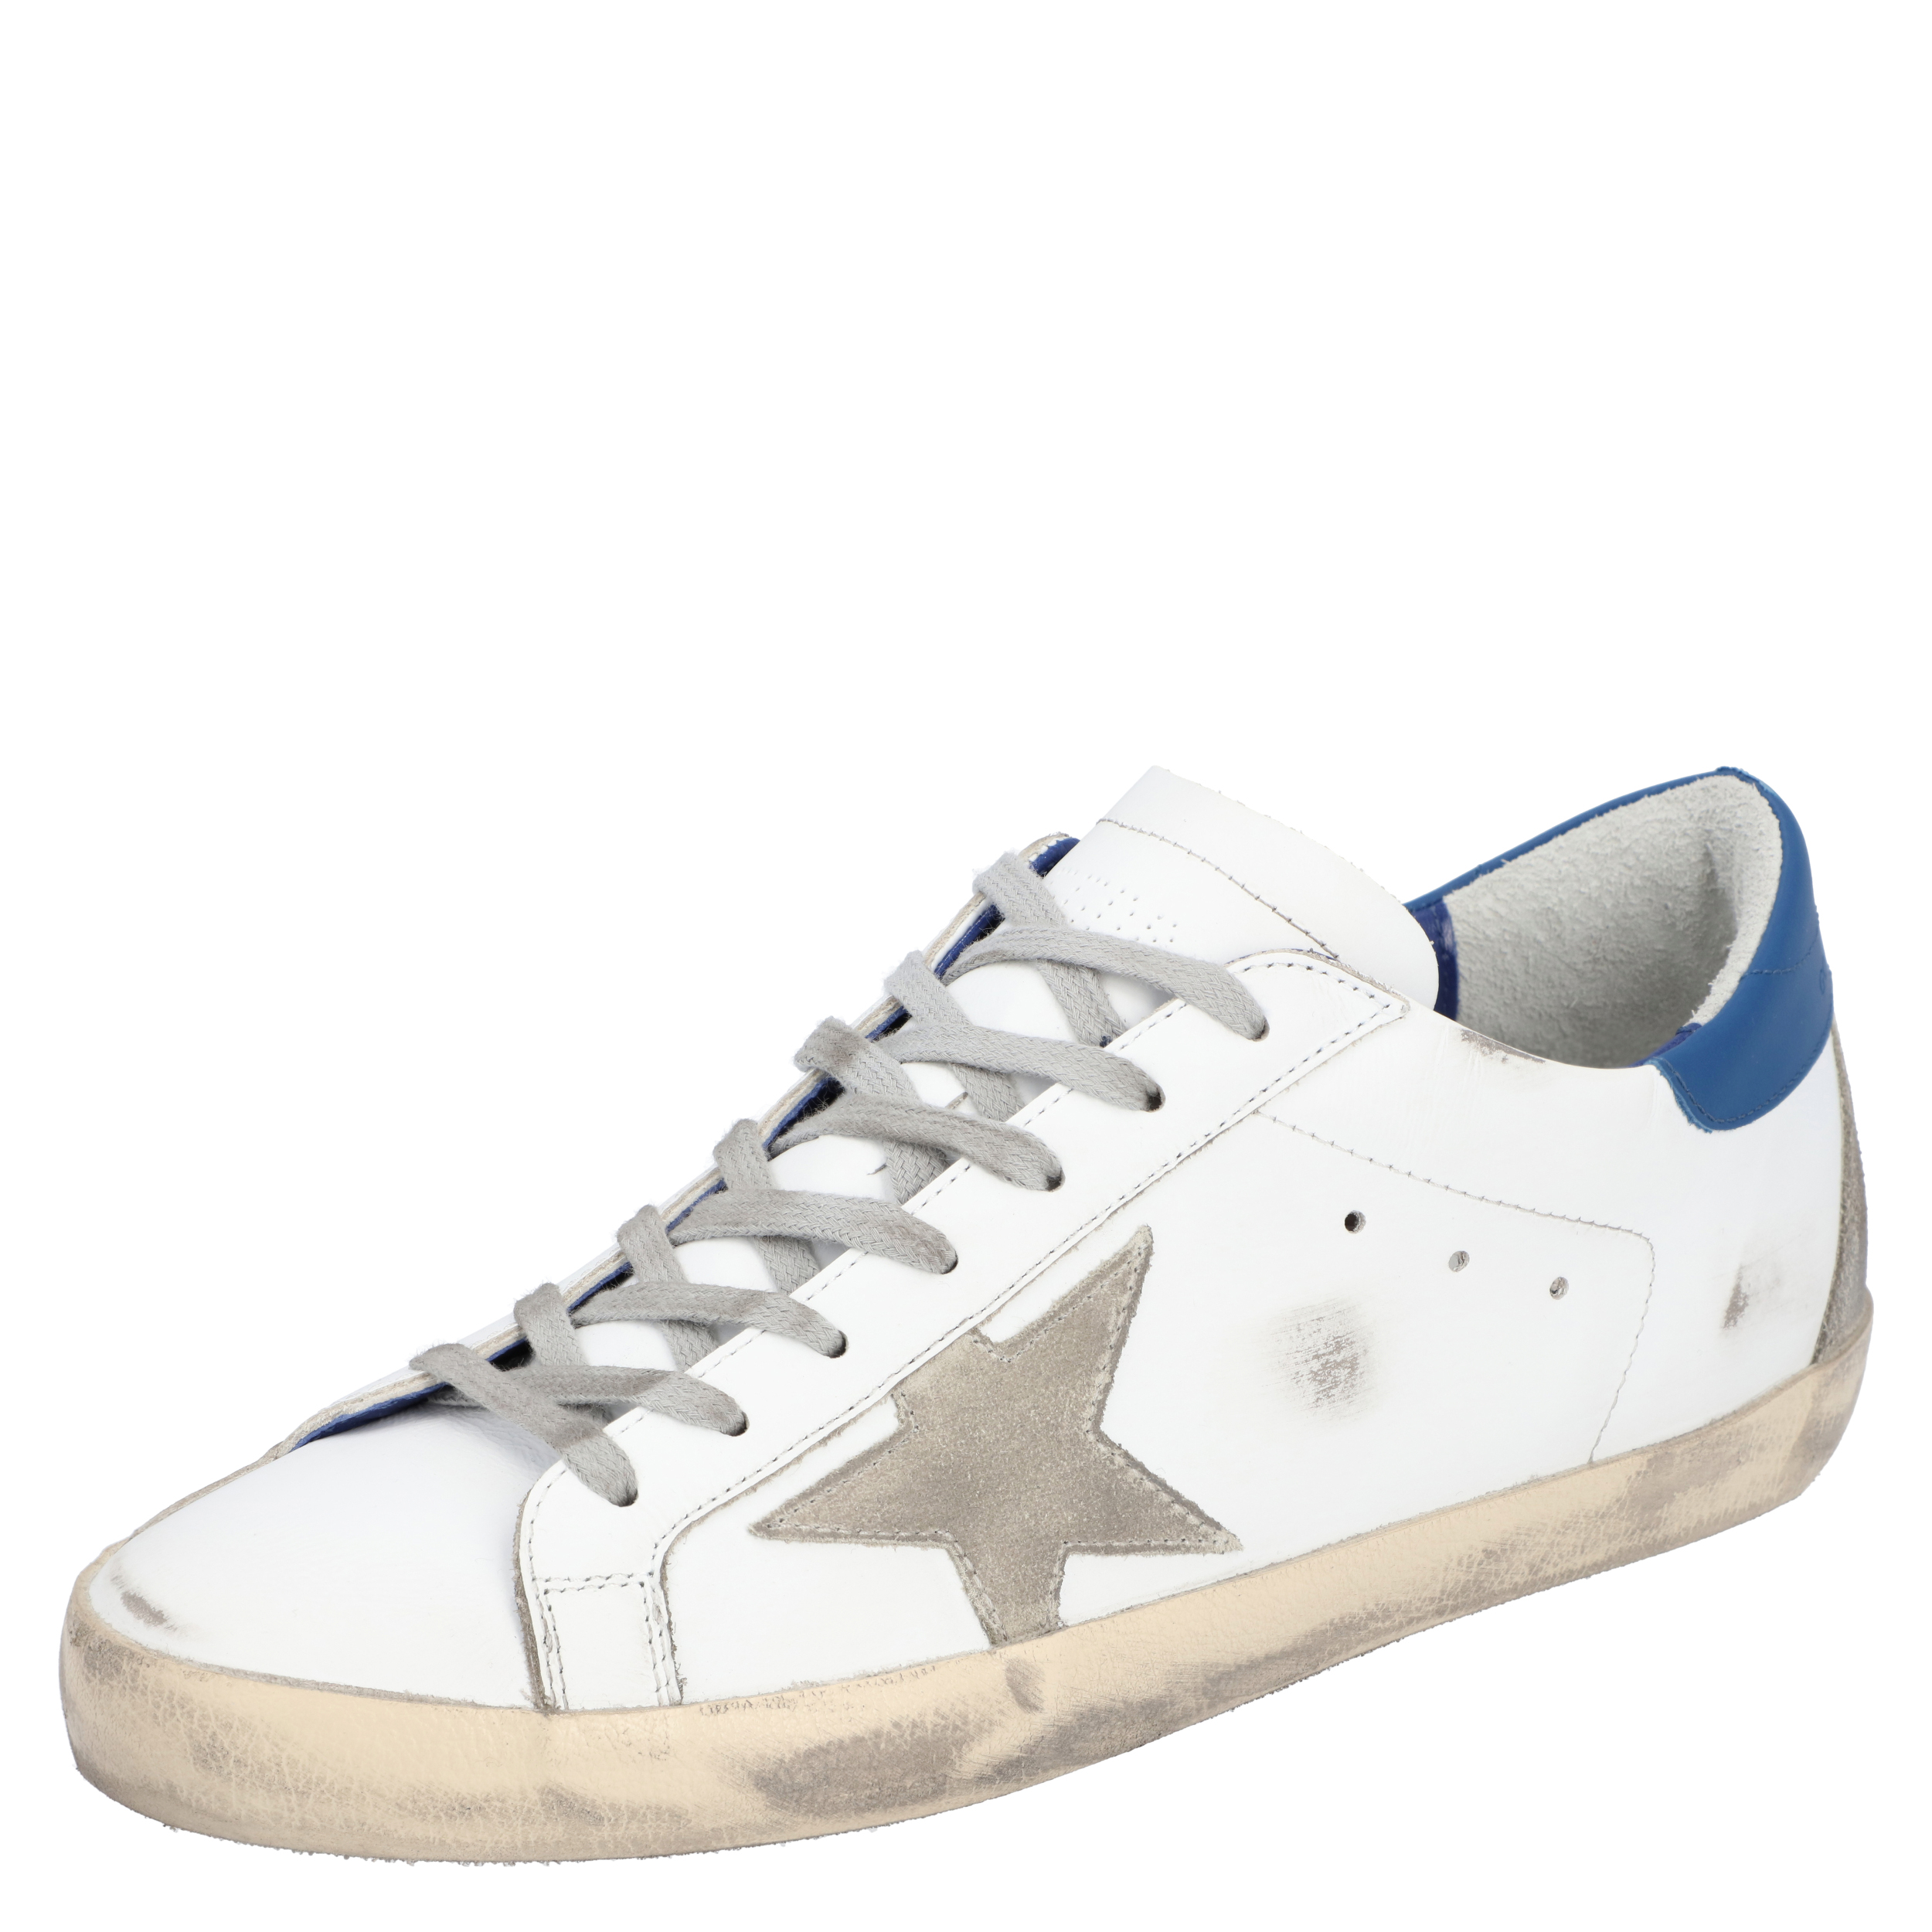 Golden Goose White/Blue Leather Superstar Sneaker Size EU 42